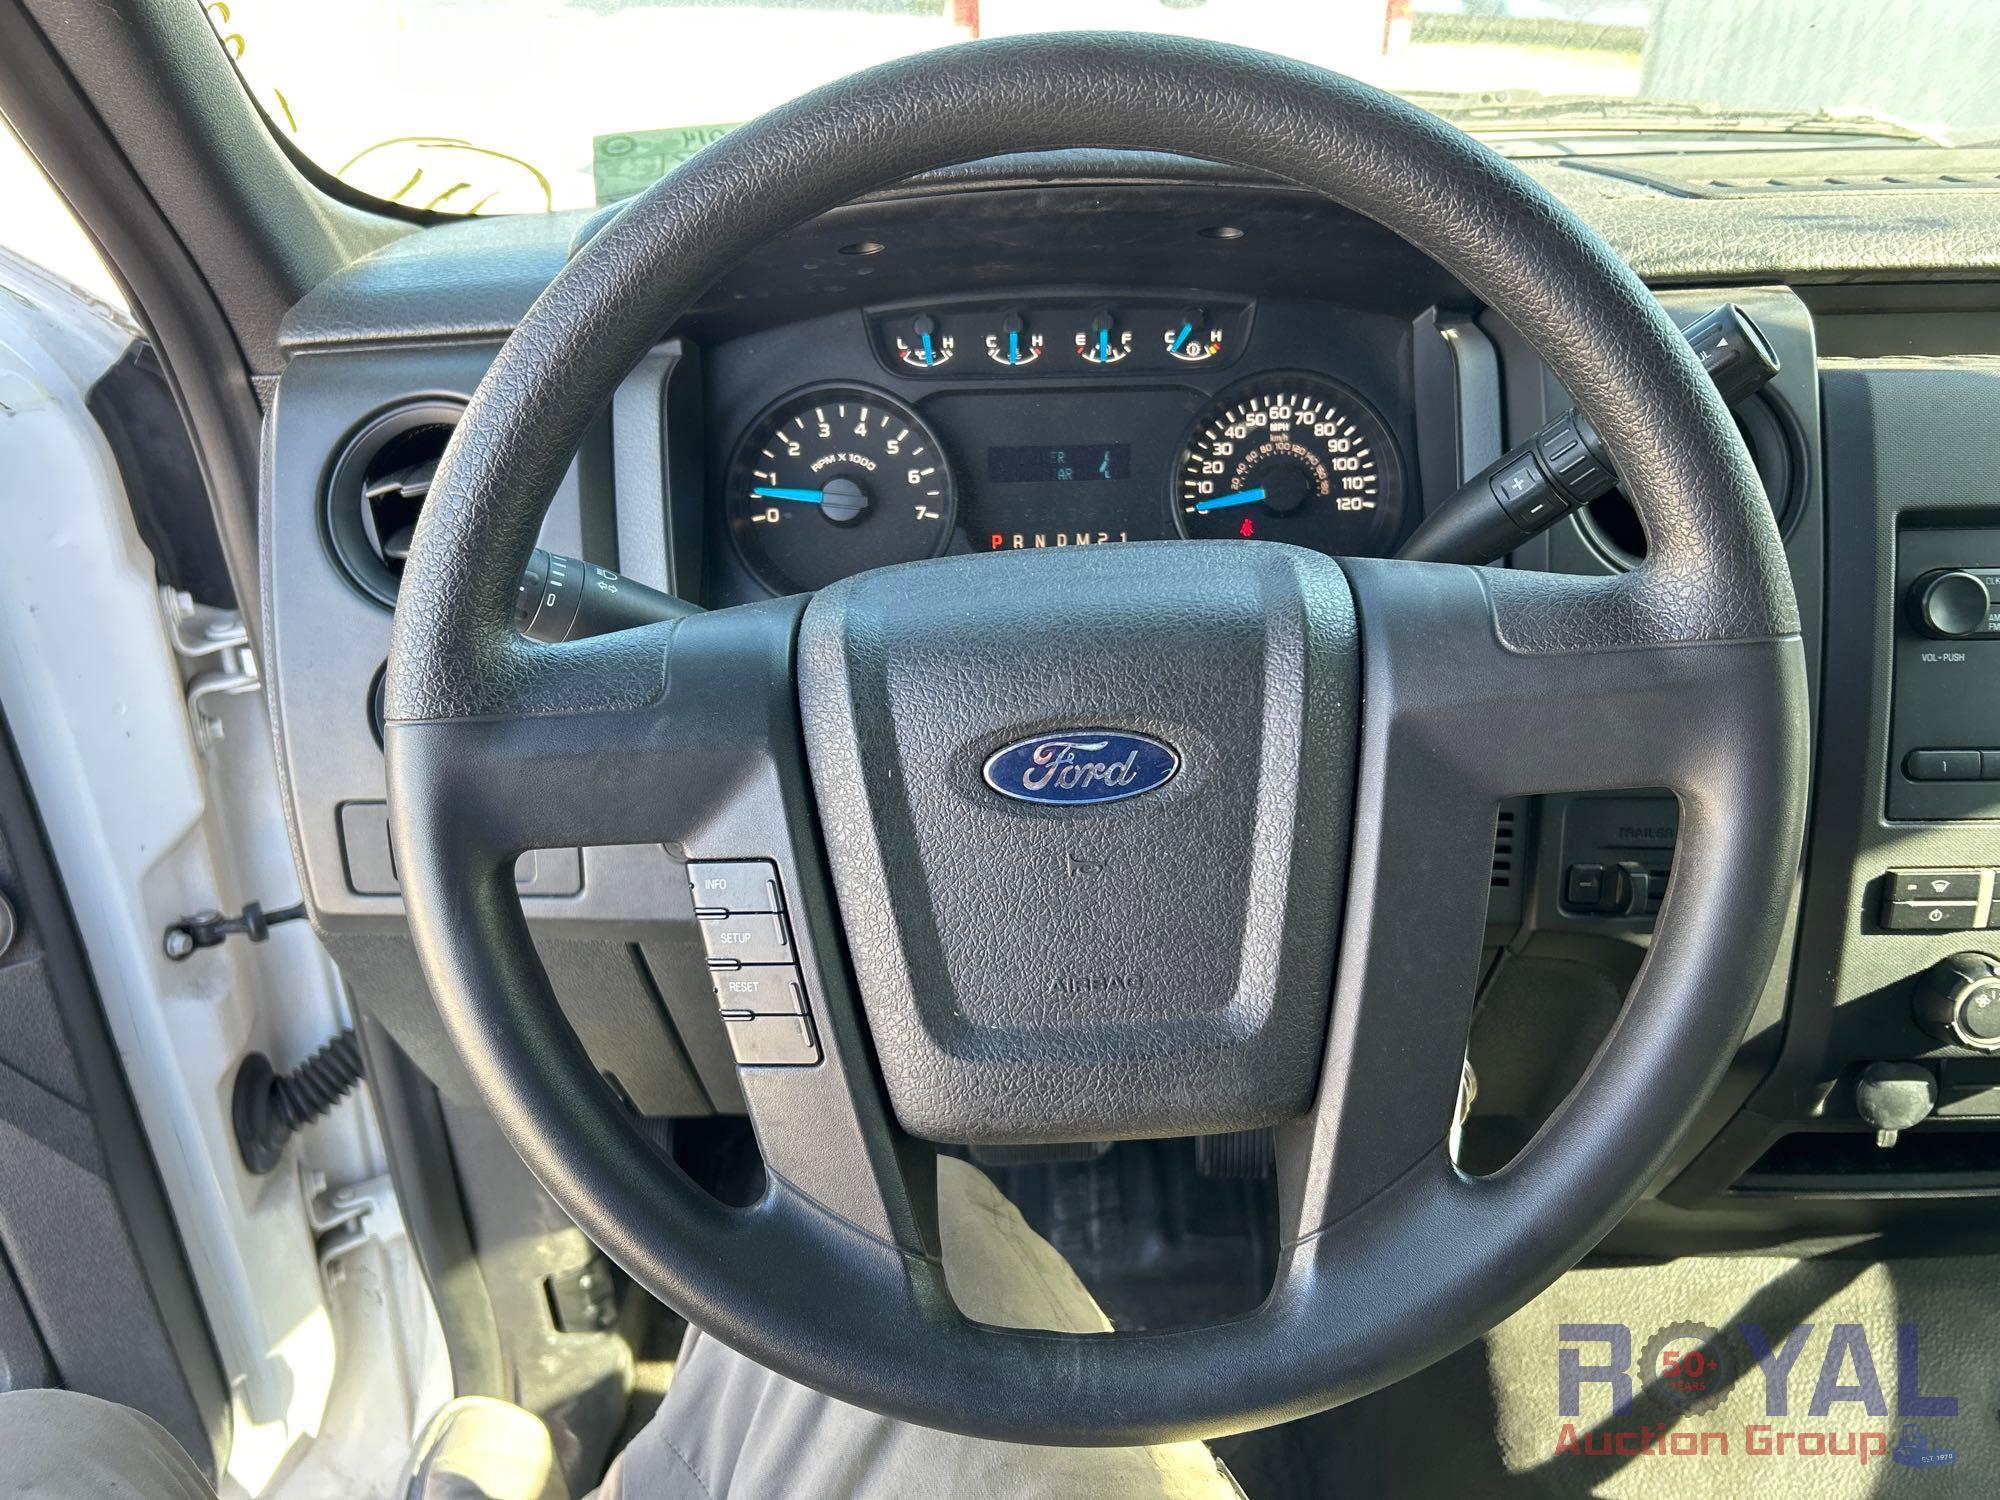 2013 Ford F-150 4X4 Ext. Cab Pickup Truck